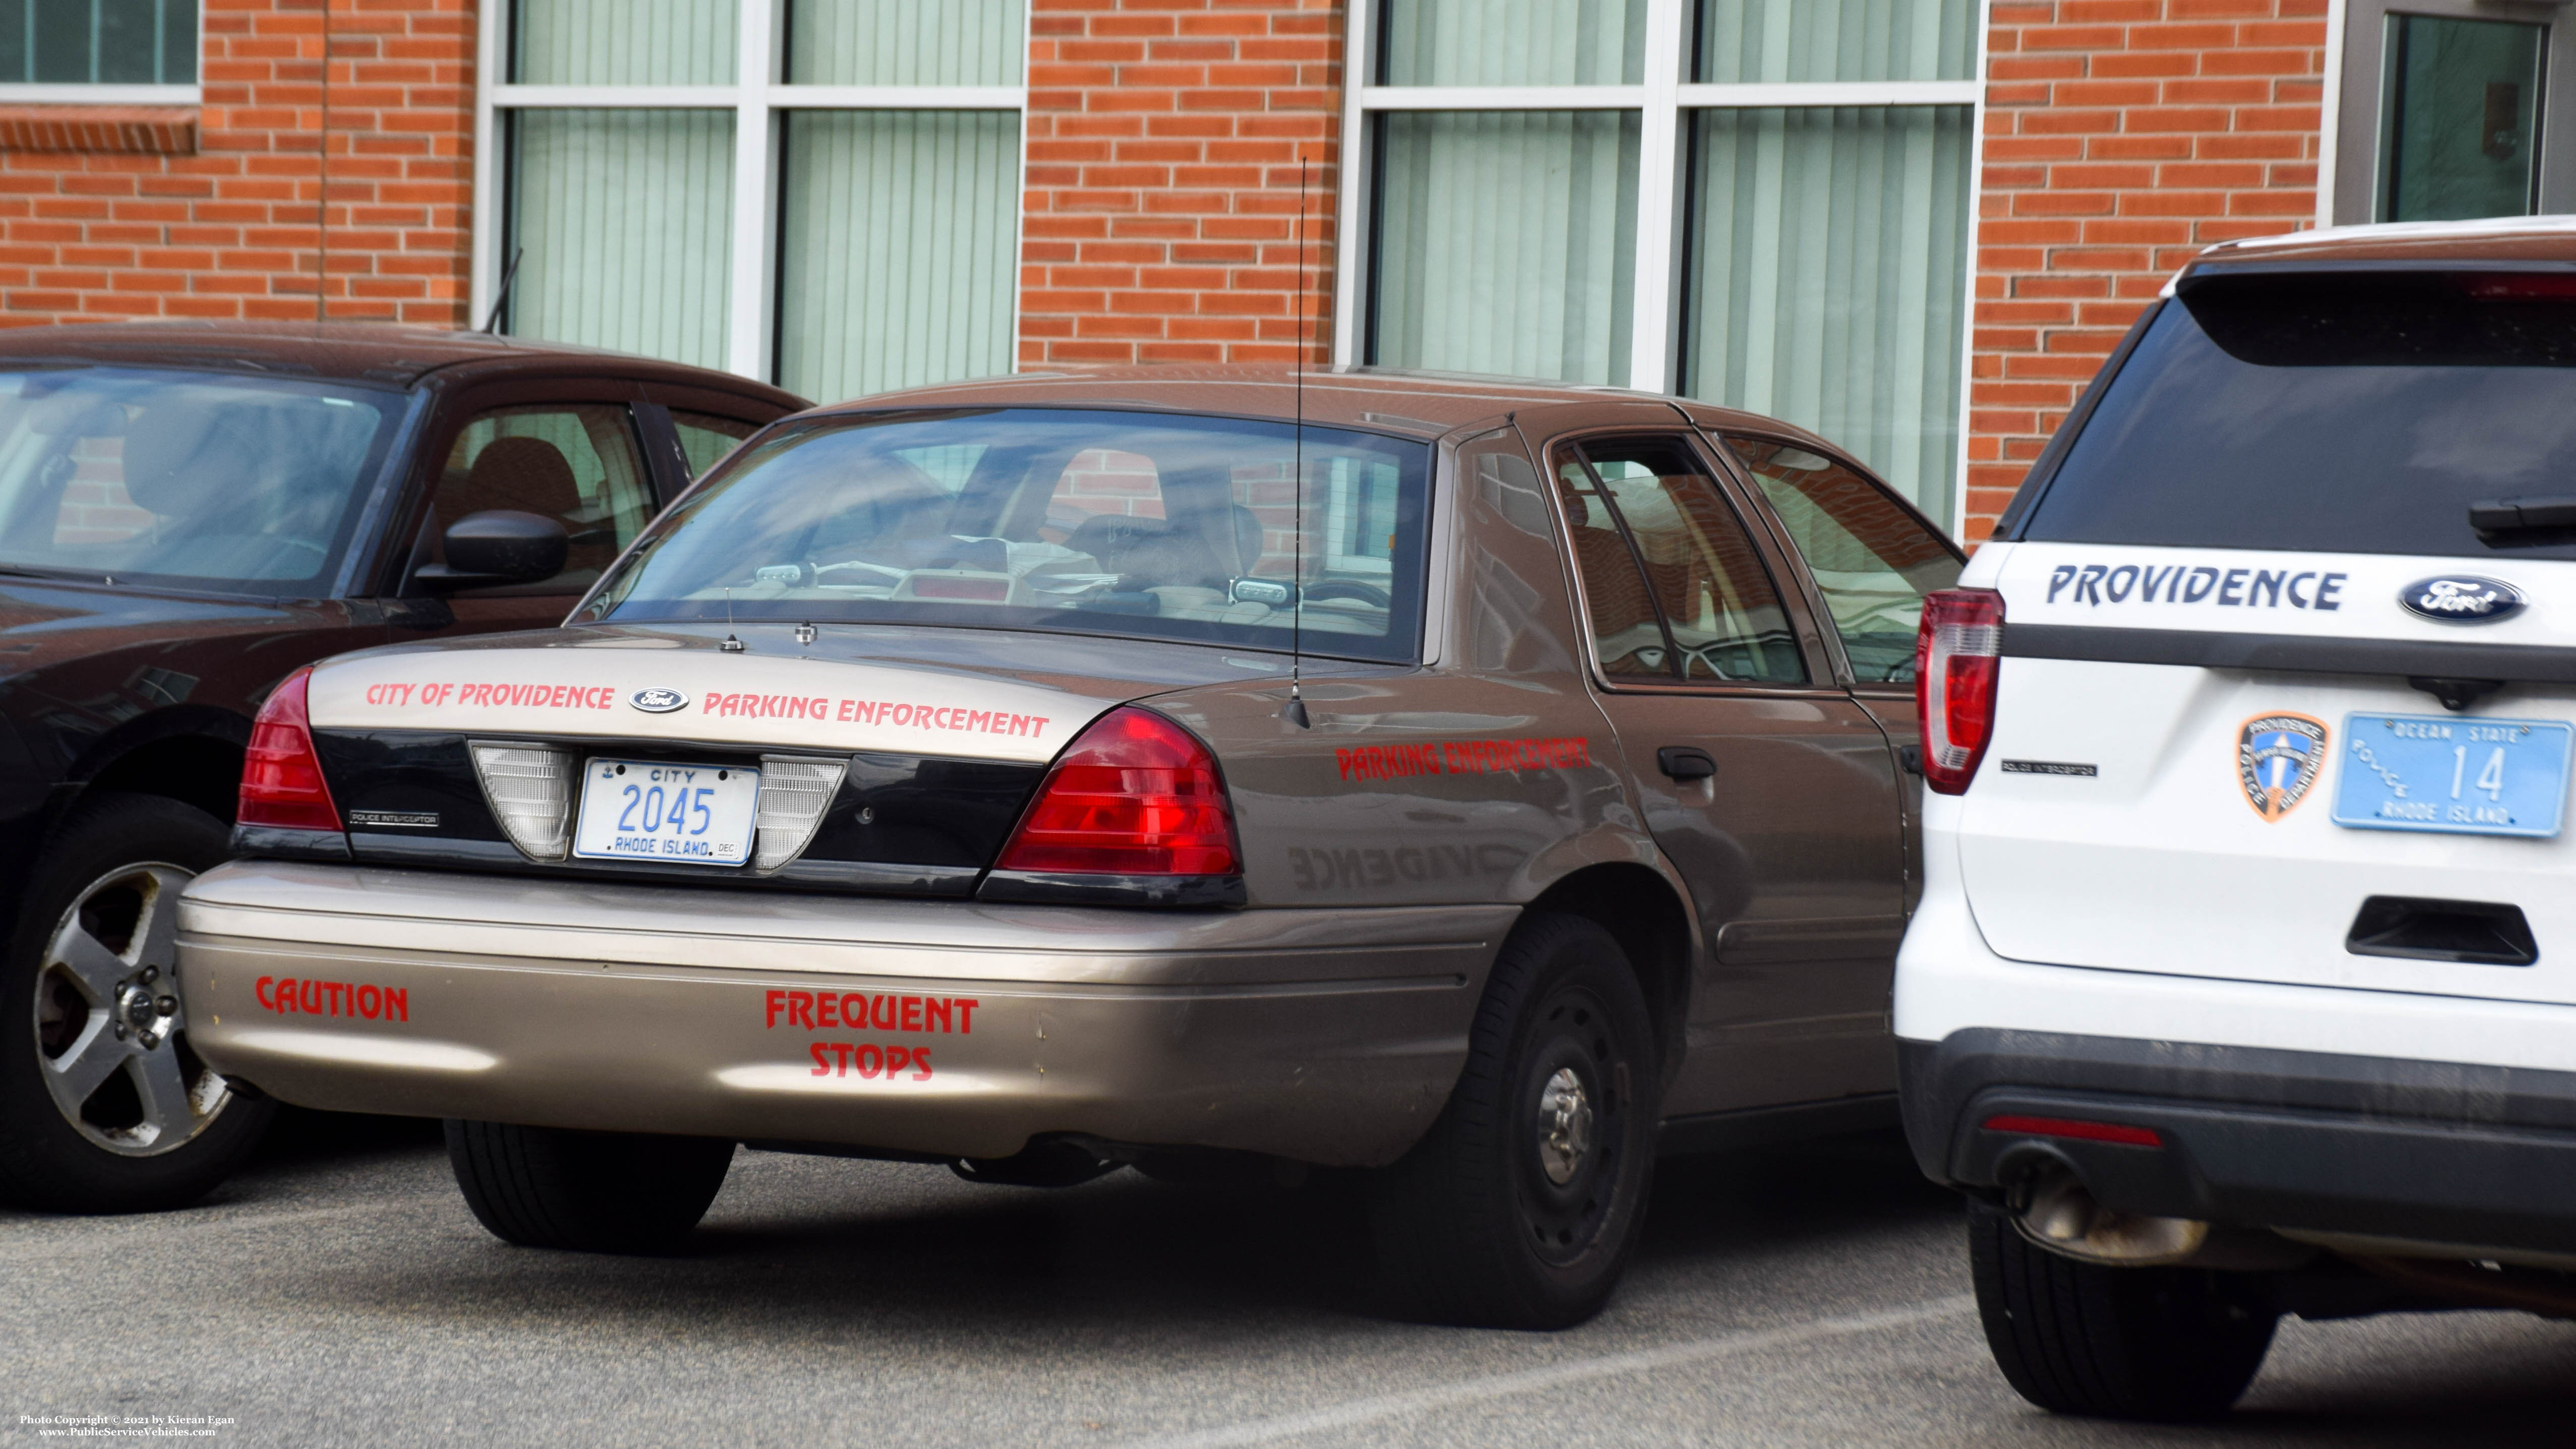 A photo  of Providence Parking Enforcement
            Car 2045, a 2003-2005 Ford Crown Victoria Police Interceptor             taken by Kieran Egan